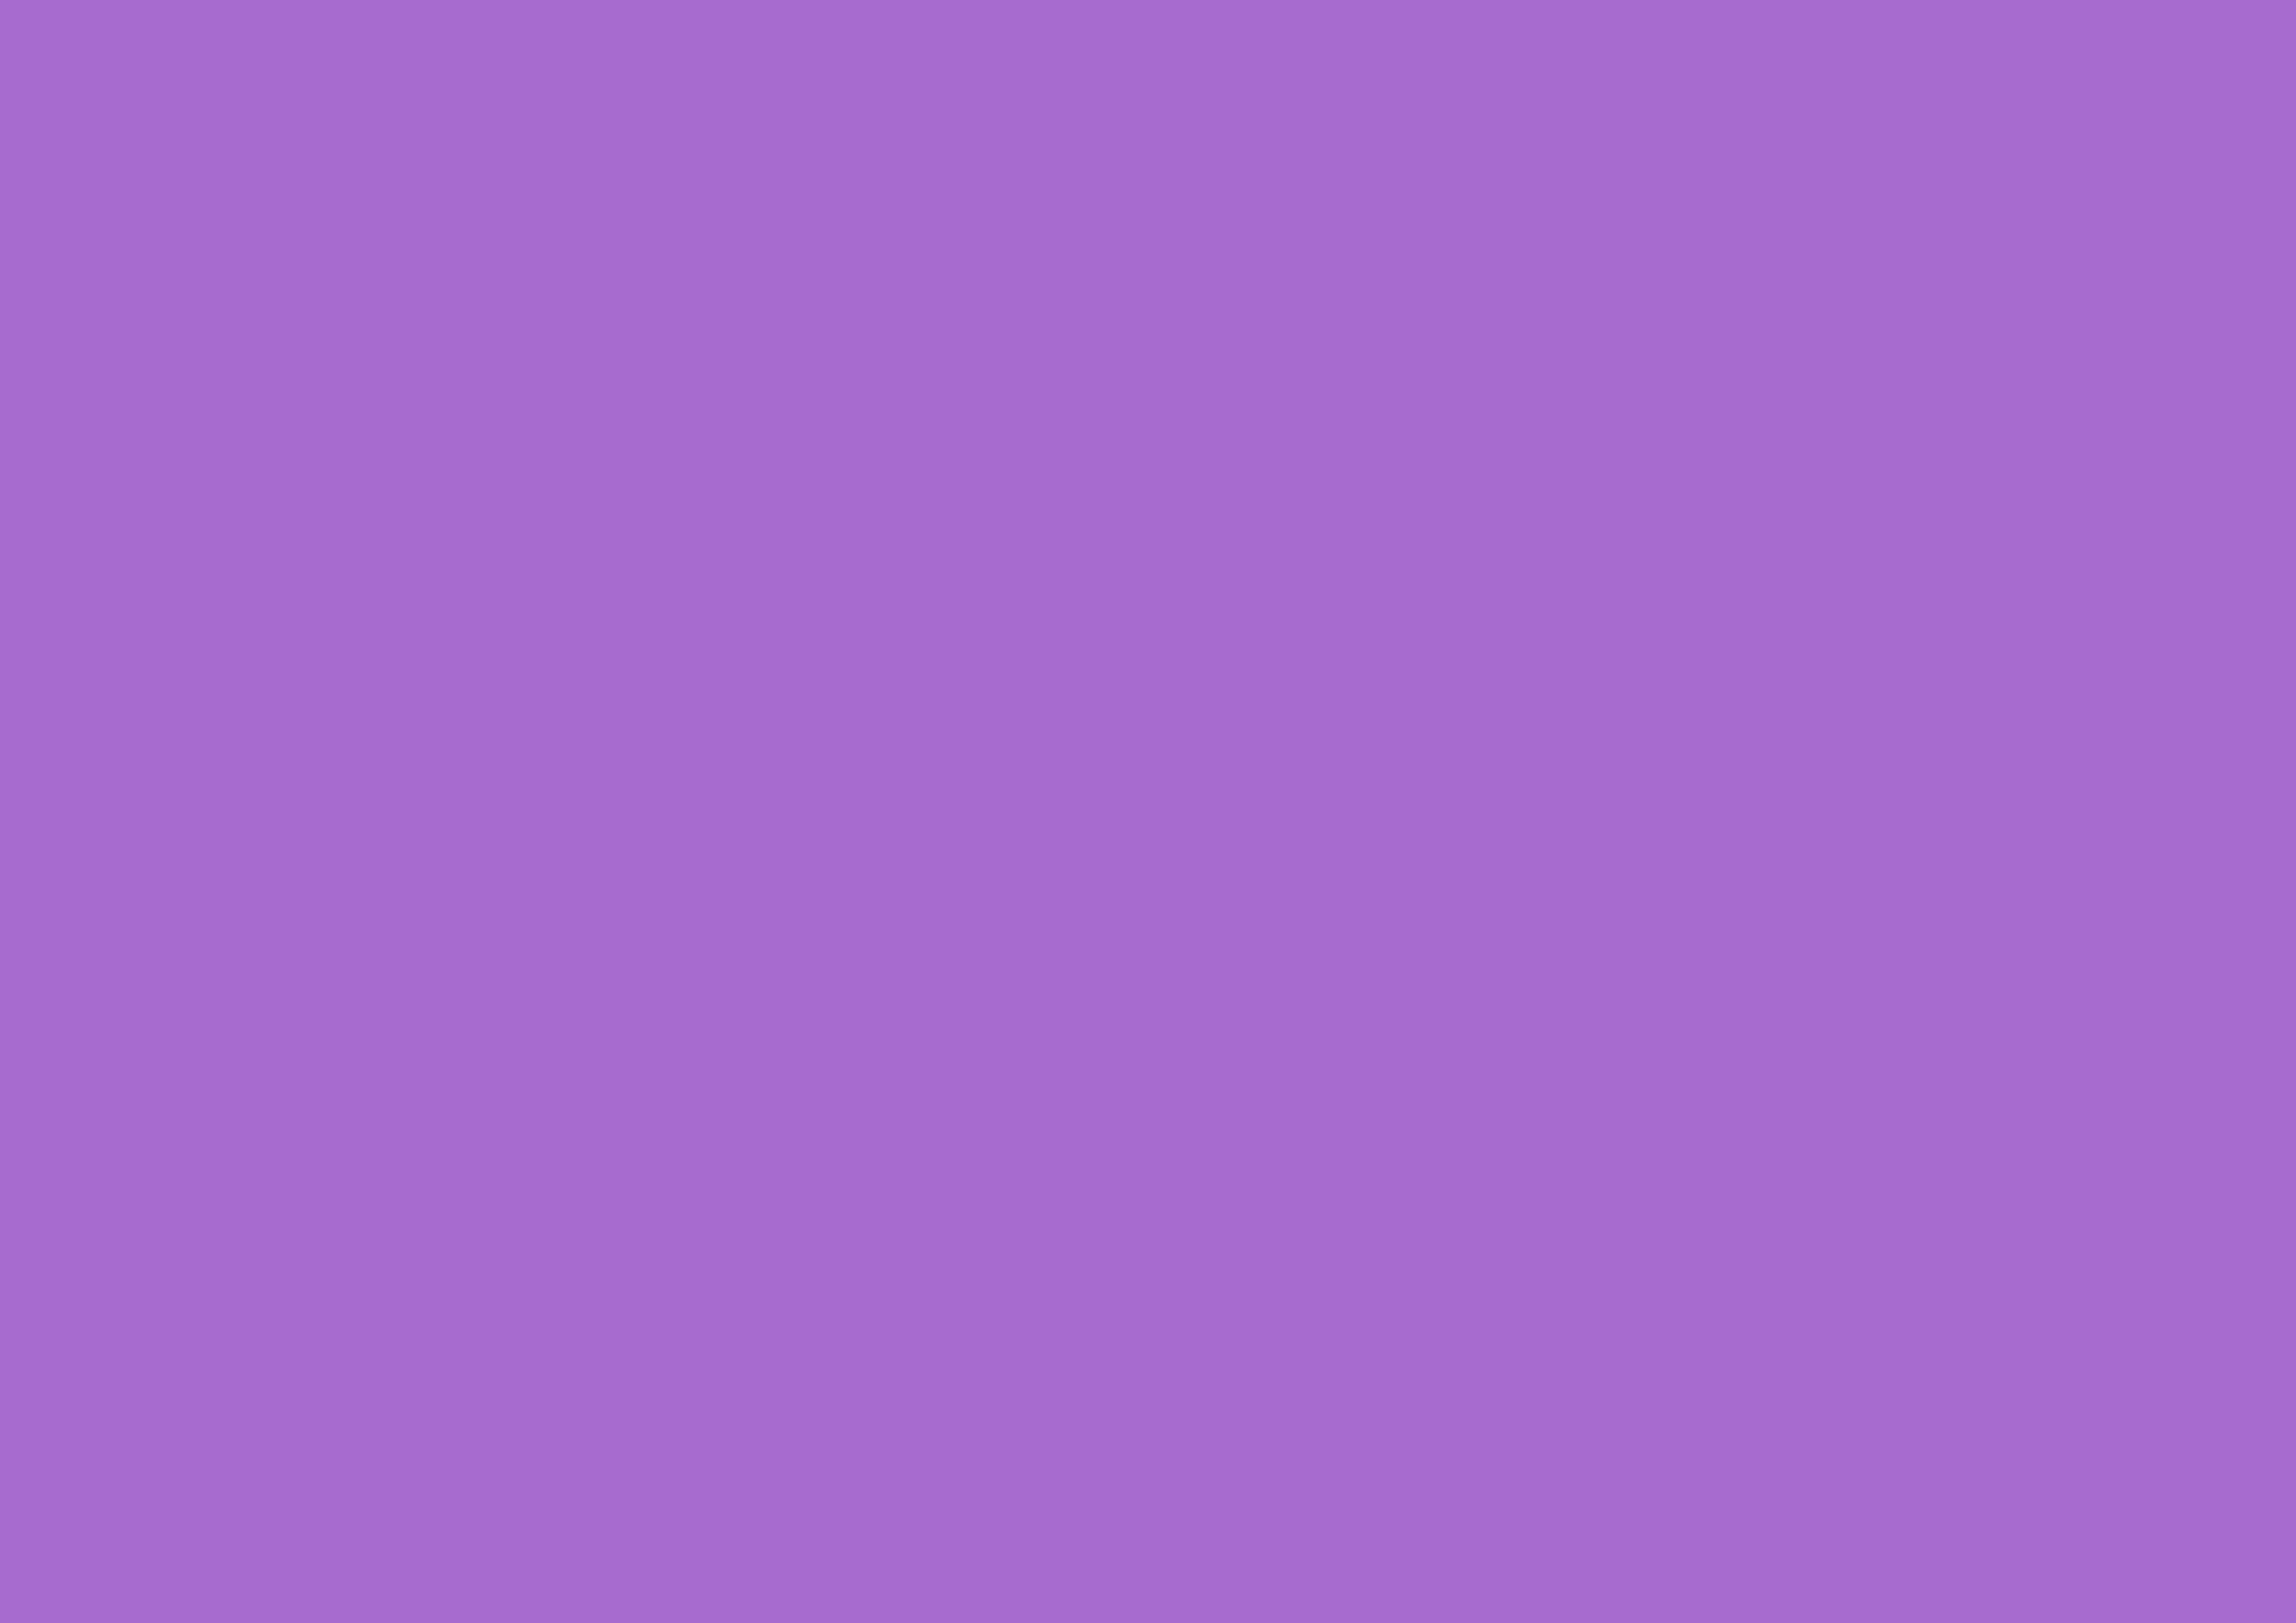 3508x2480 Rich Lavender Solid Color Background